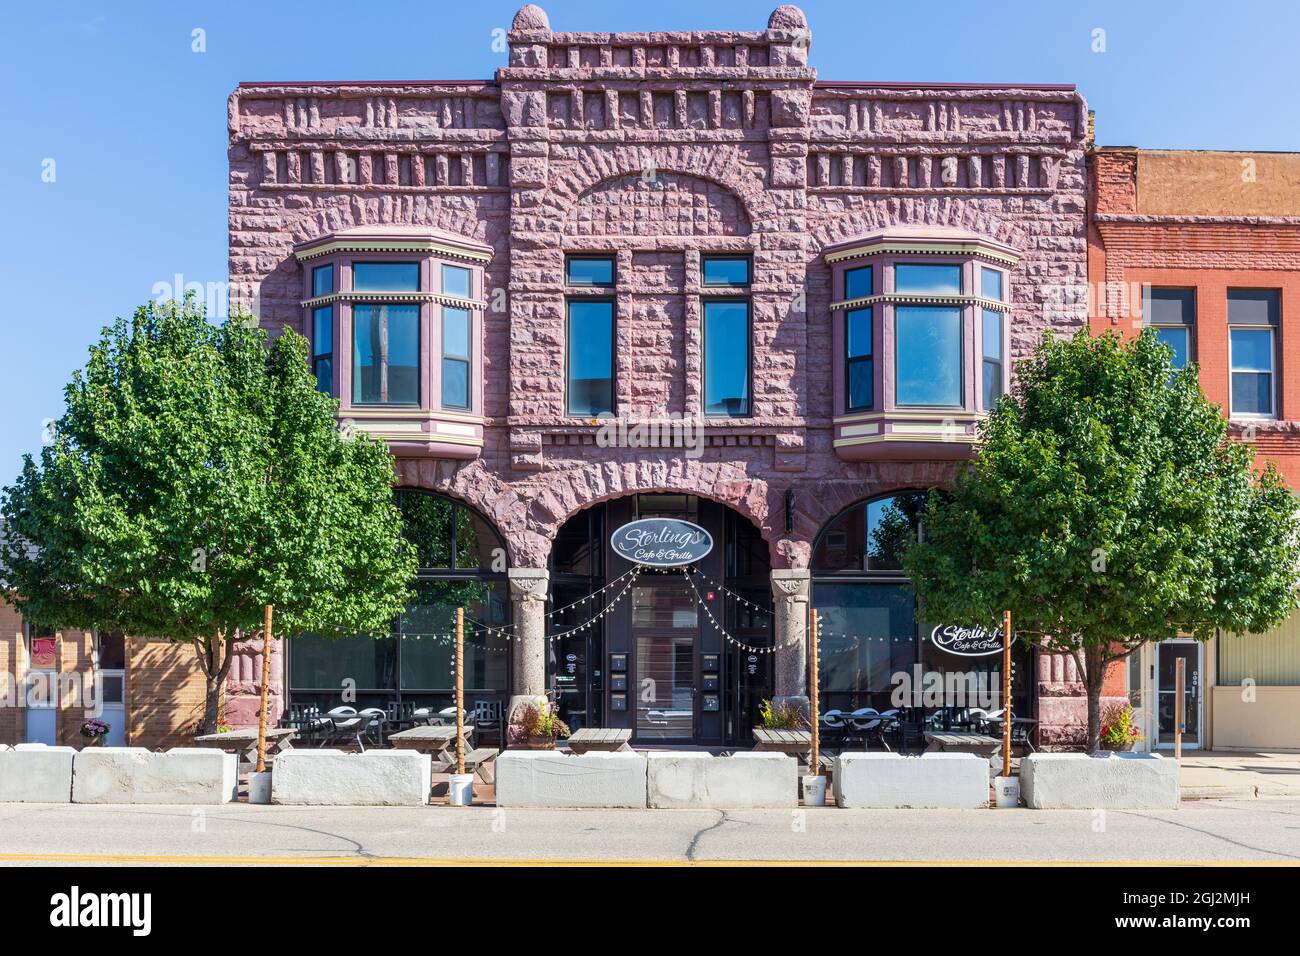 LUVERNE, MN, USA-21 AUGUST 2021: Sterling's Cafe & Grille, zeigt Eingang, Schild und Fassade. Stockfoto